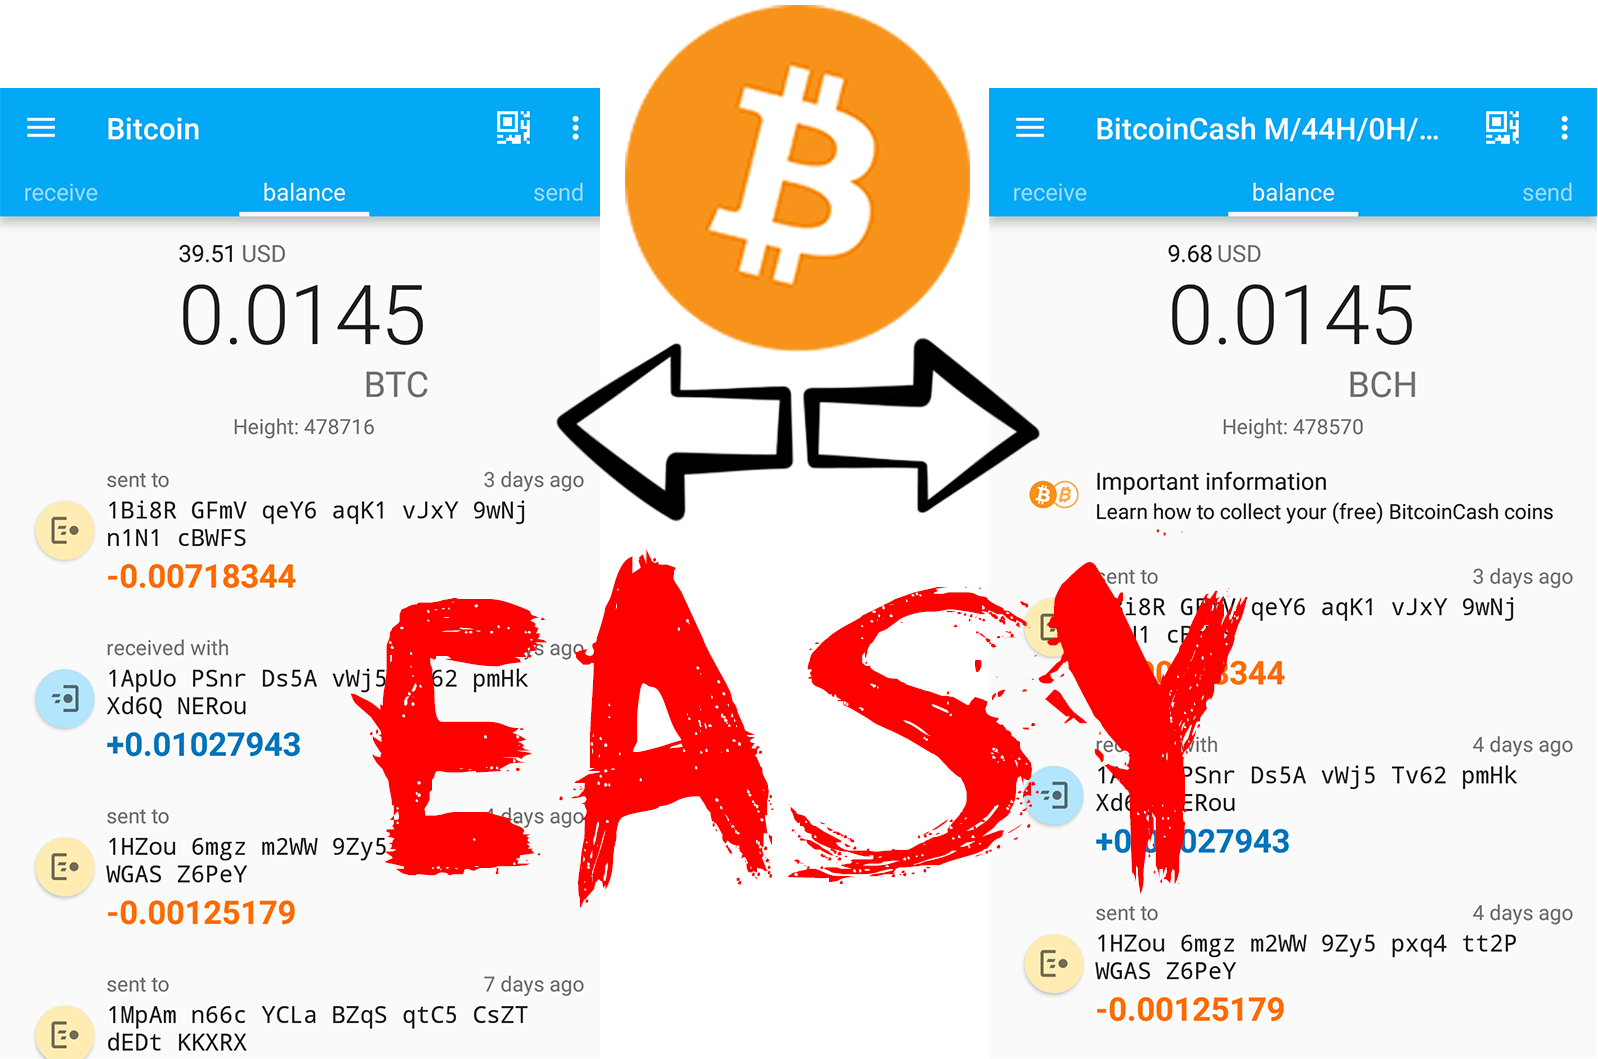 how do you claim your bitcoin cash